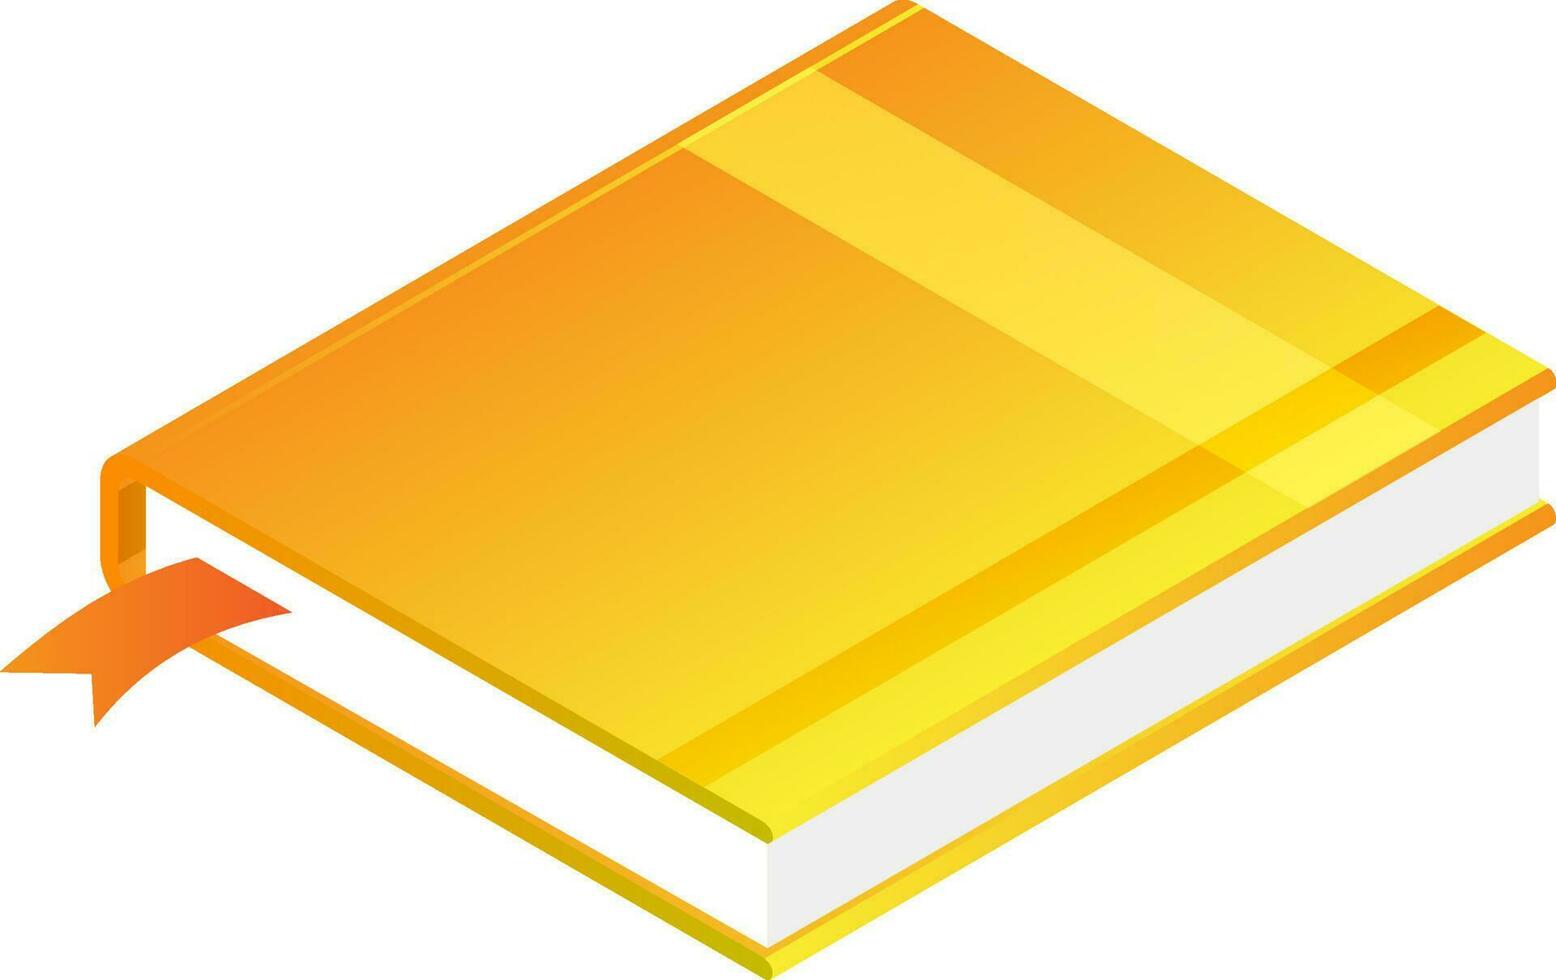 3D illustration of book in golden color. vector